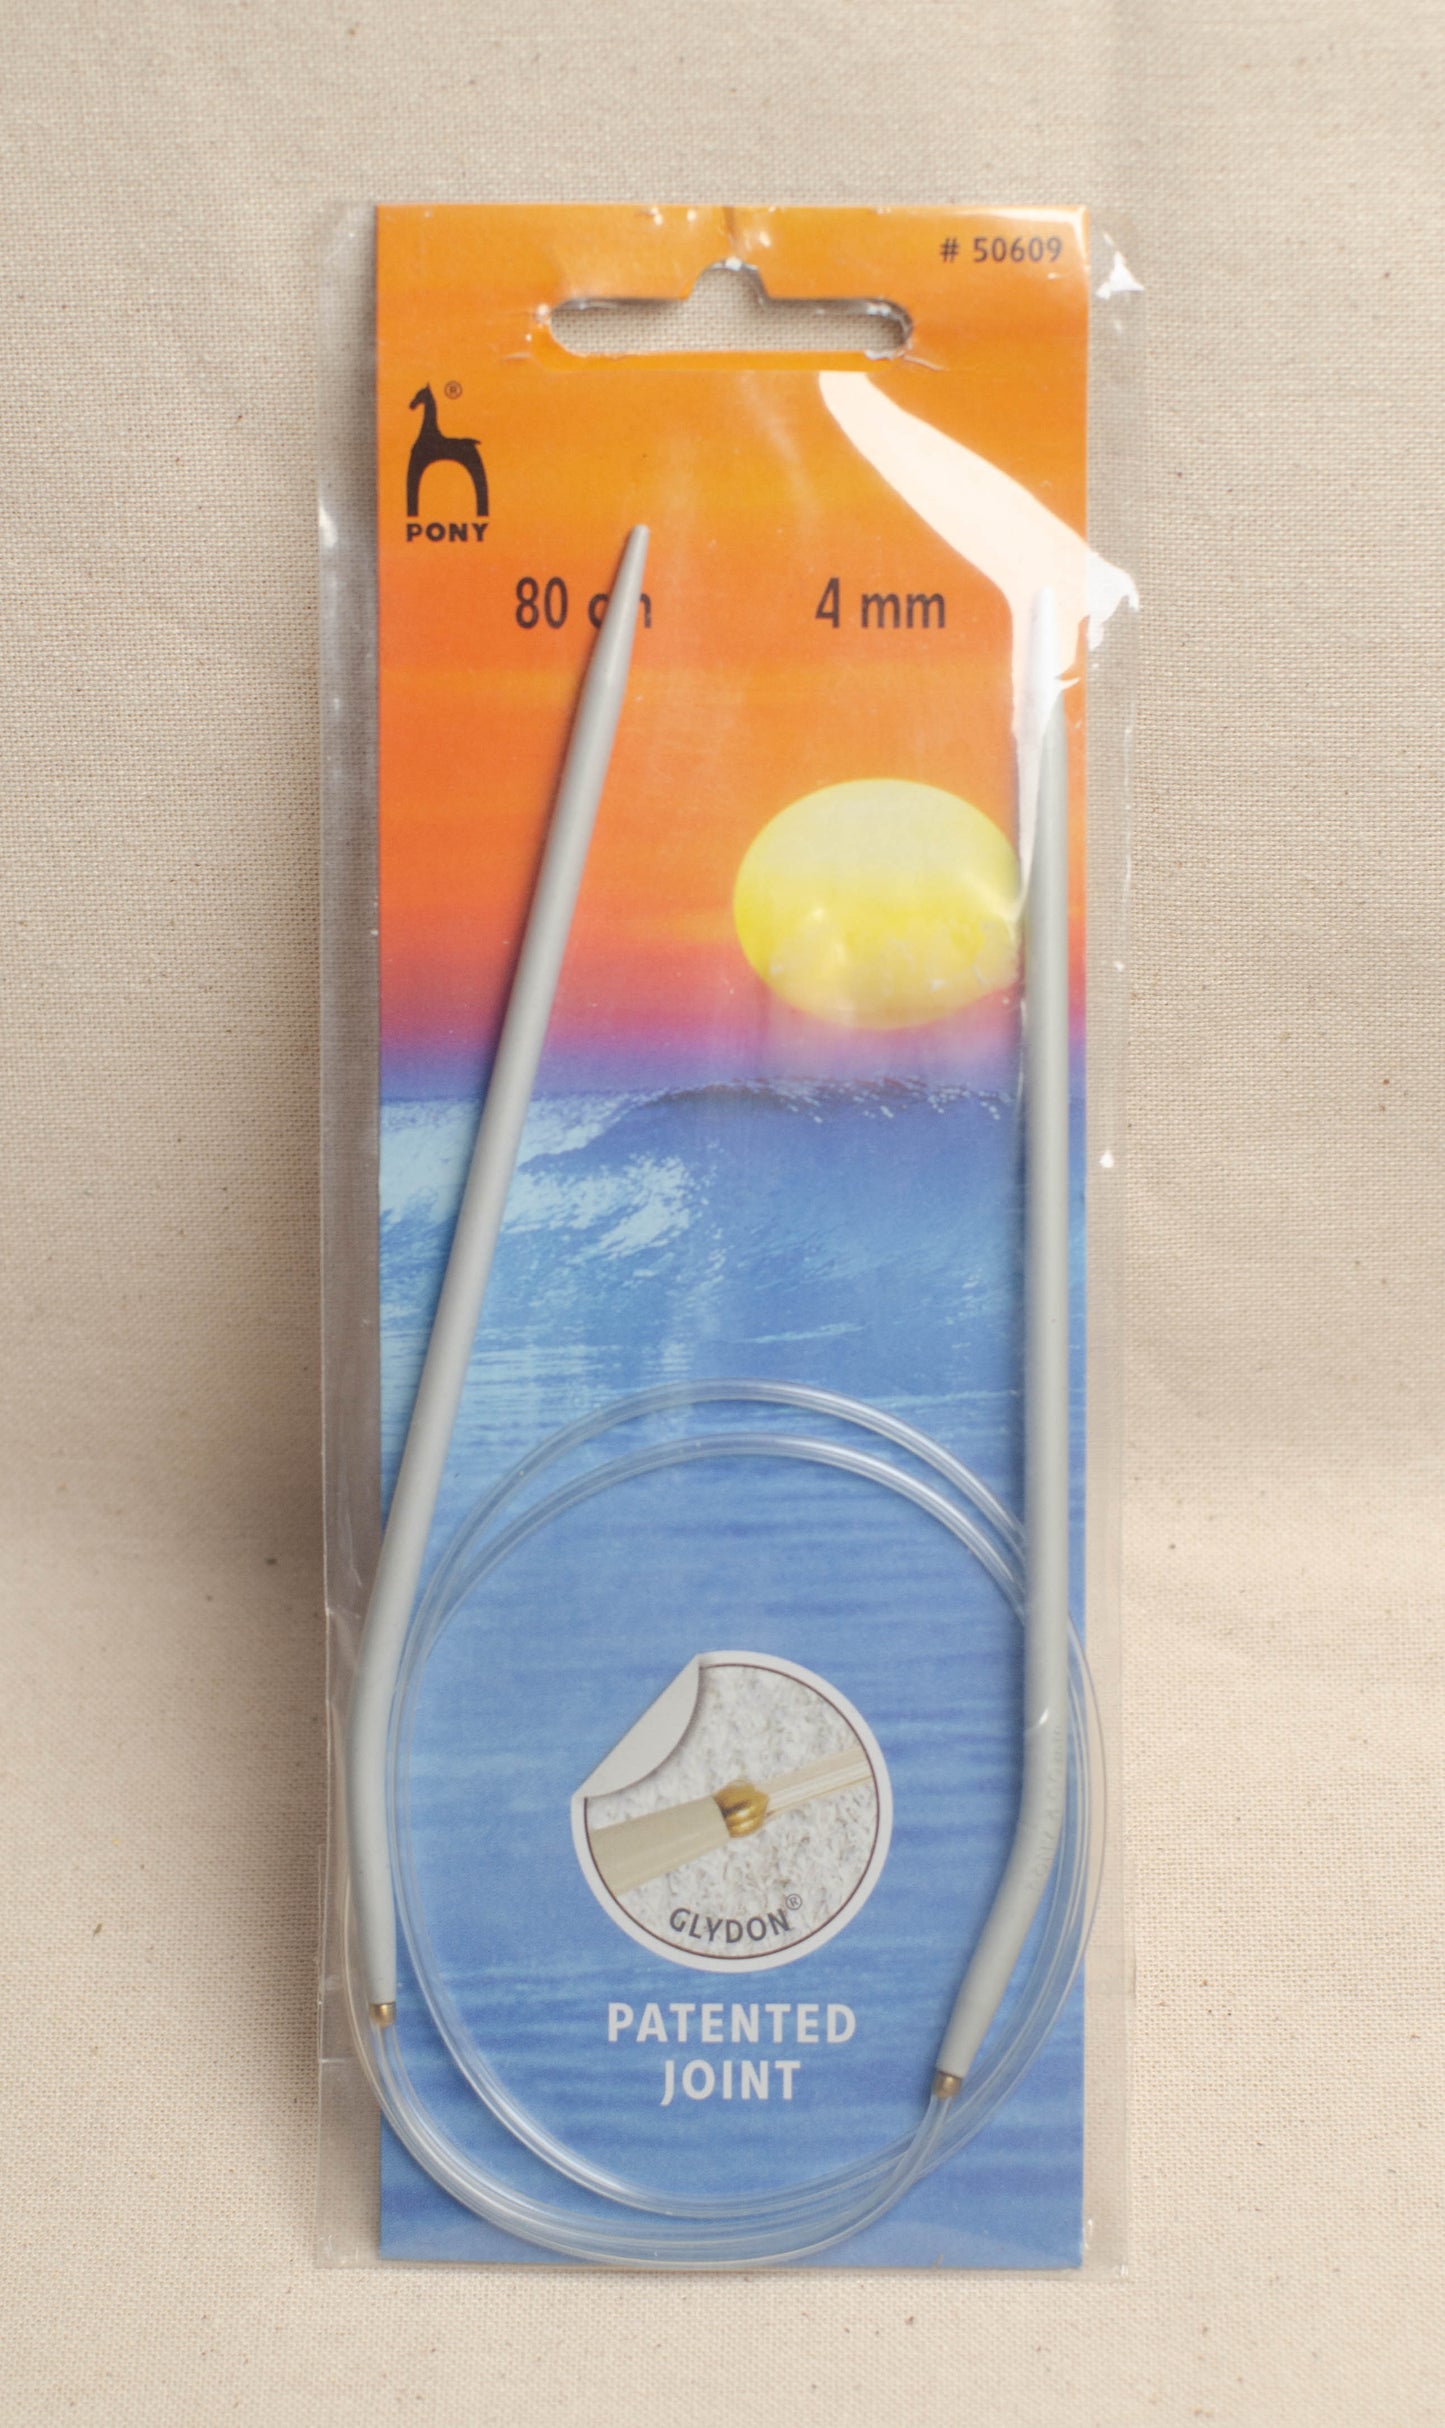 80cm/ 4.0mm Pony Classic Fixed Circular Knitting Needles